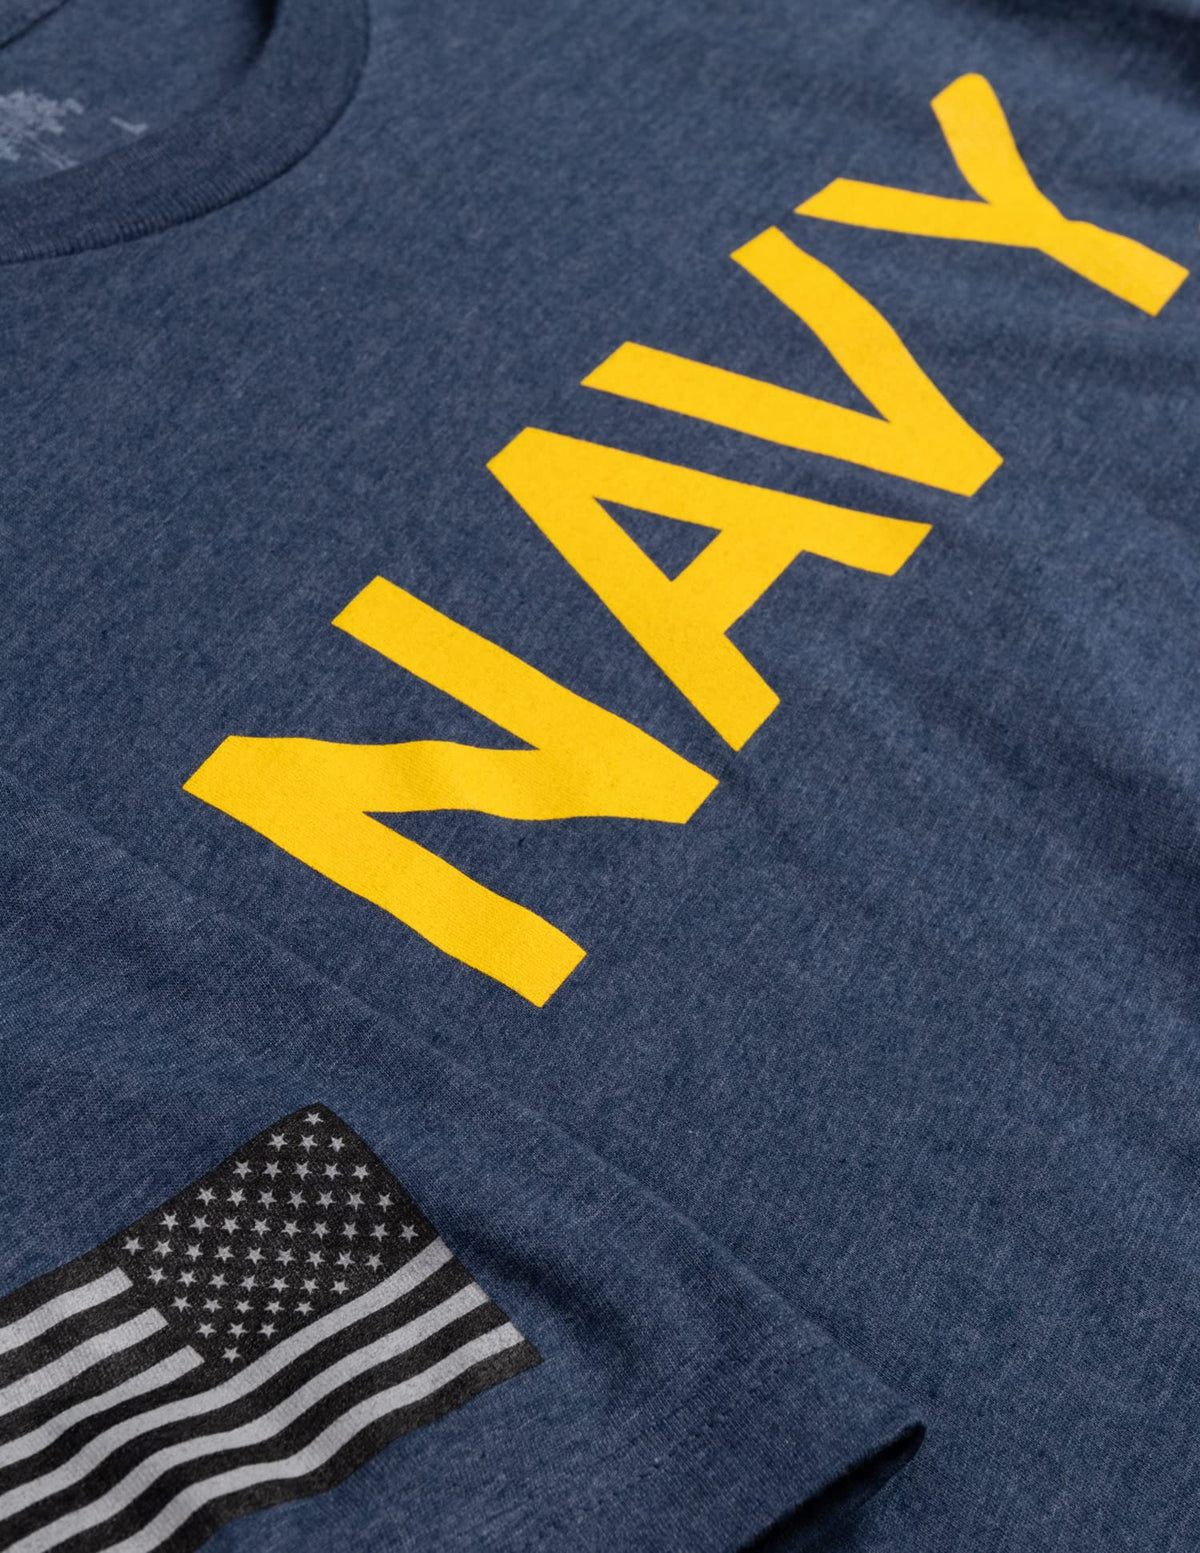 USS Illinois, SSN-786 | U.S. Navy Sailor Veteran USN United States Naval T-shirt for Men Women